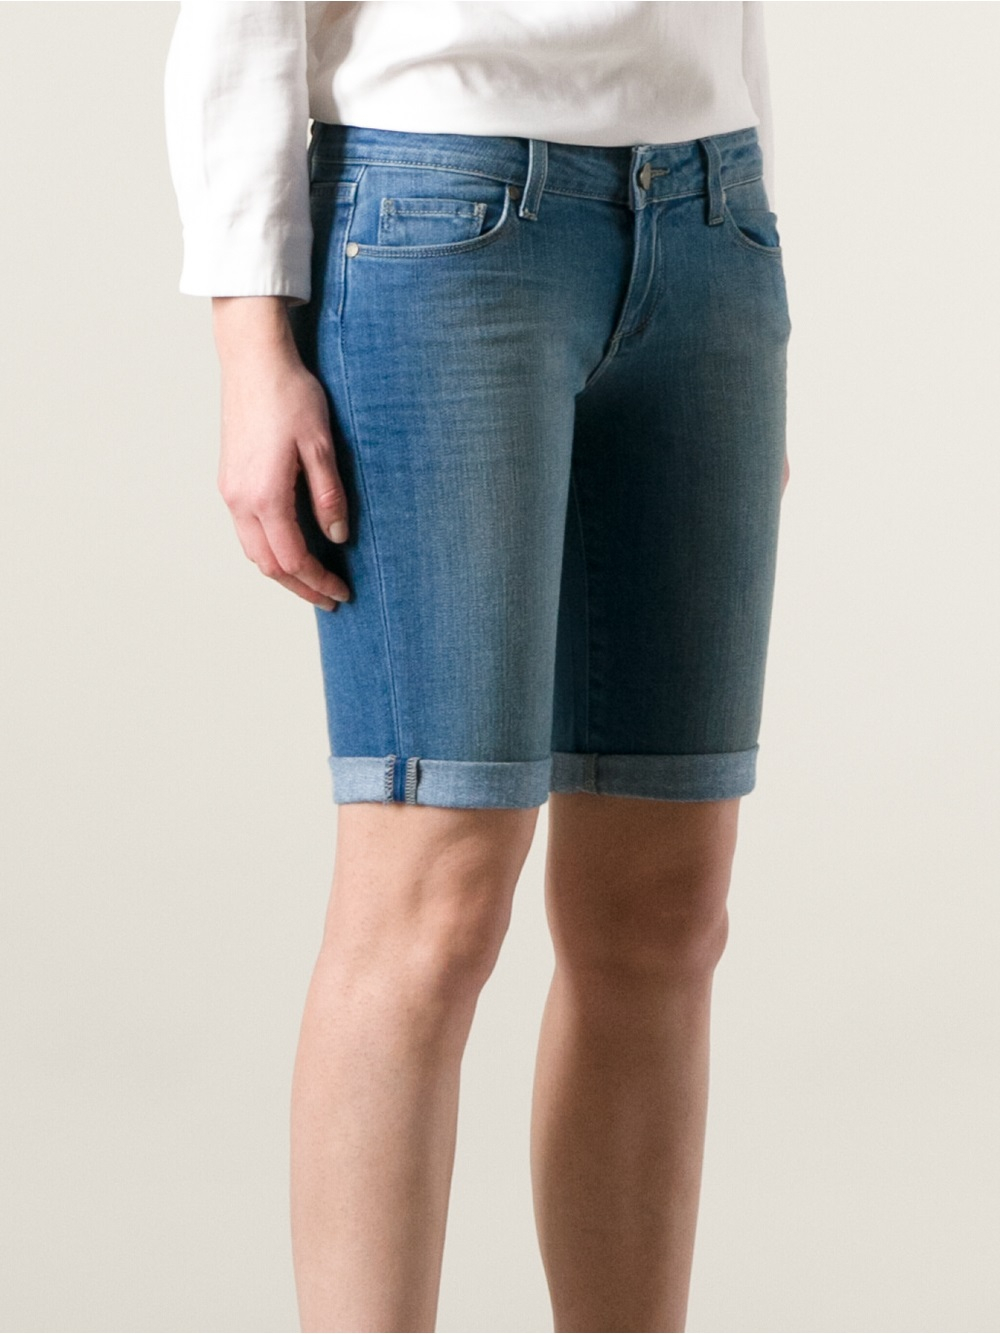 Lyst - Paige Jax Knee Length Denim Shorts in Blue